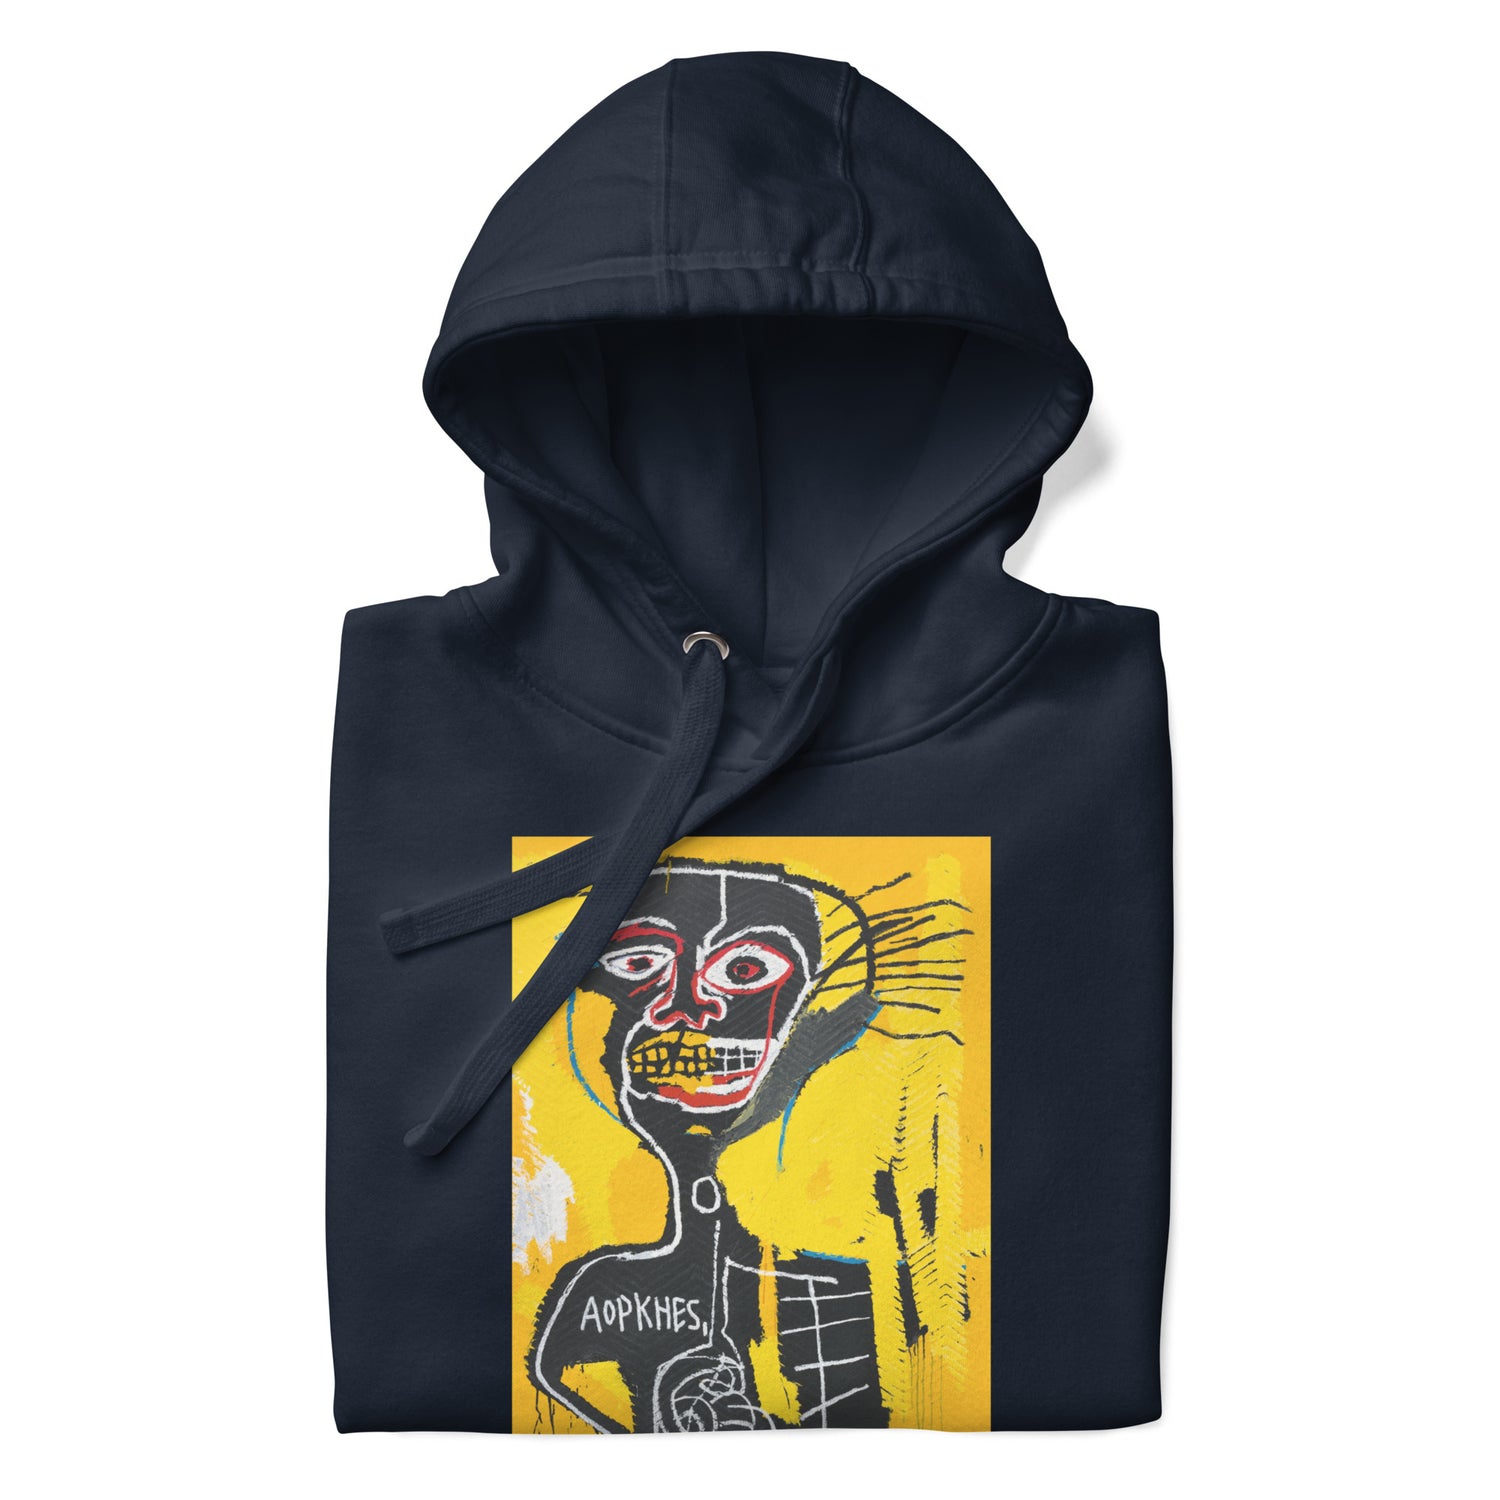 Jean-Michel Basquiat "Cabeza" Artwork Printed Premium Streetwear Sweatshirt Hoodie Navy Blue